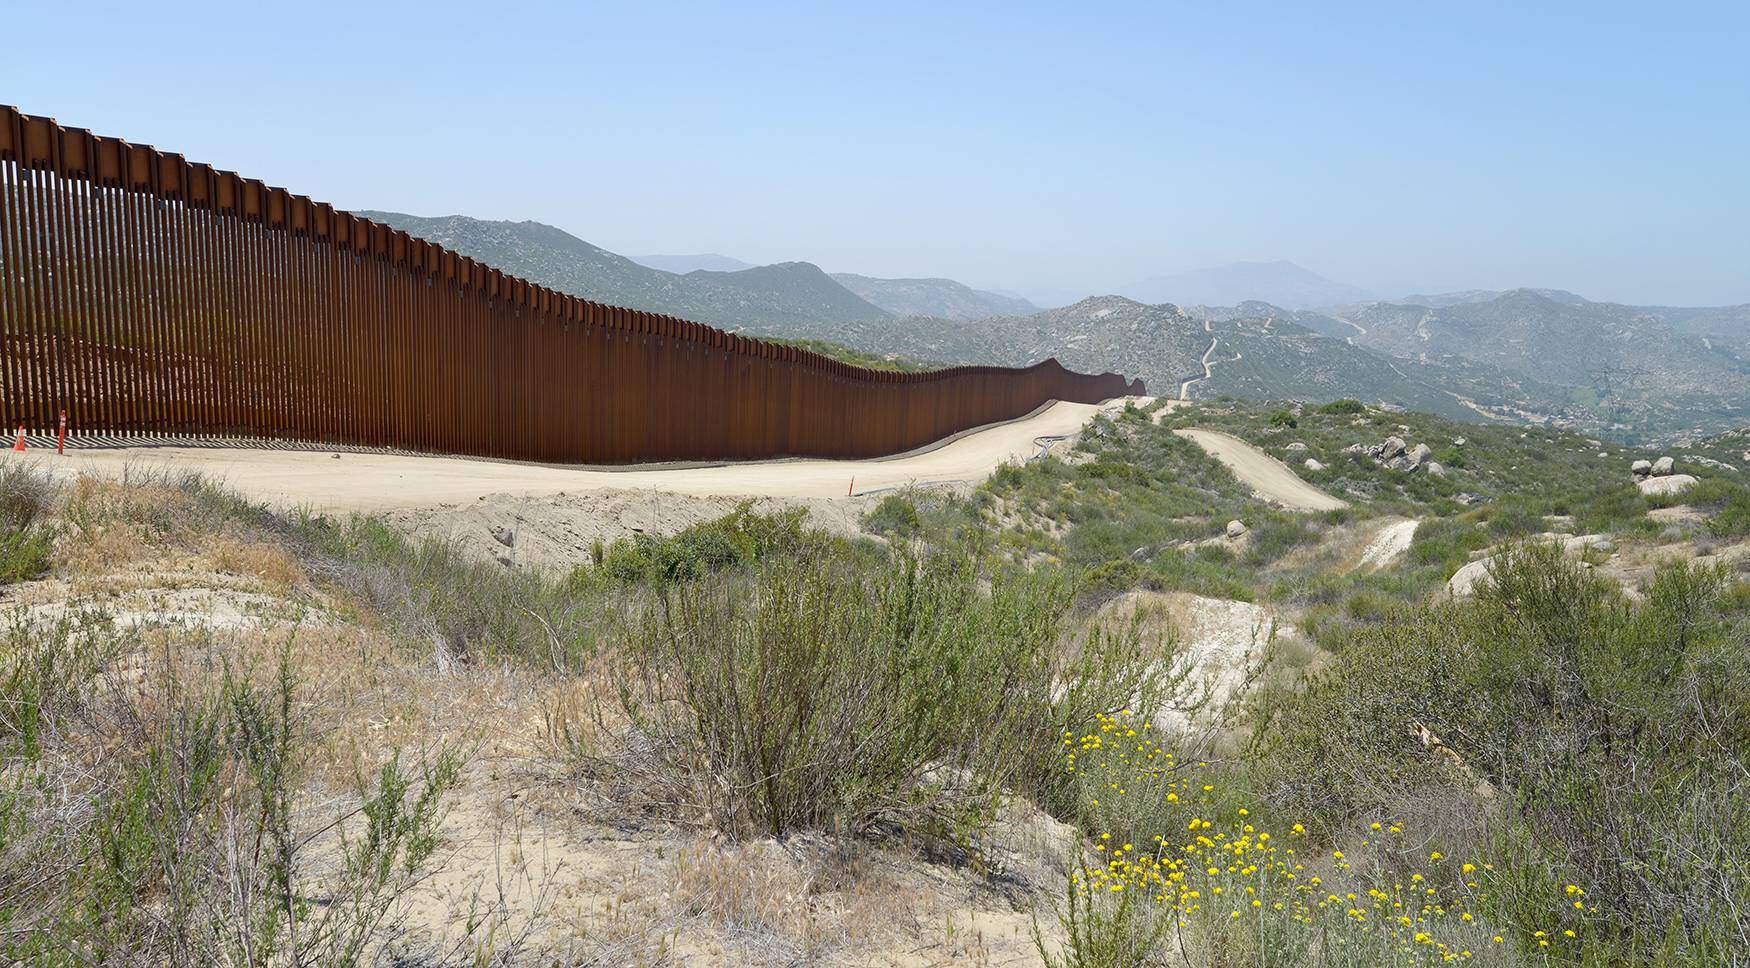 u.s.-mexico border